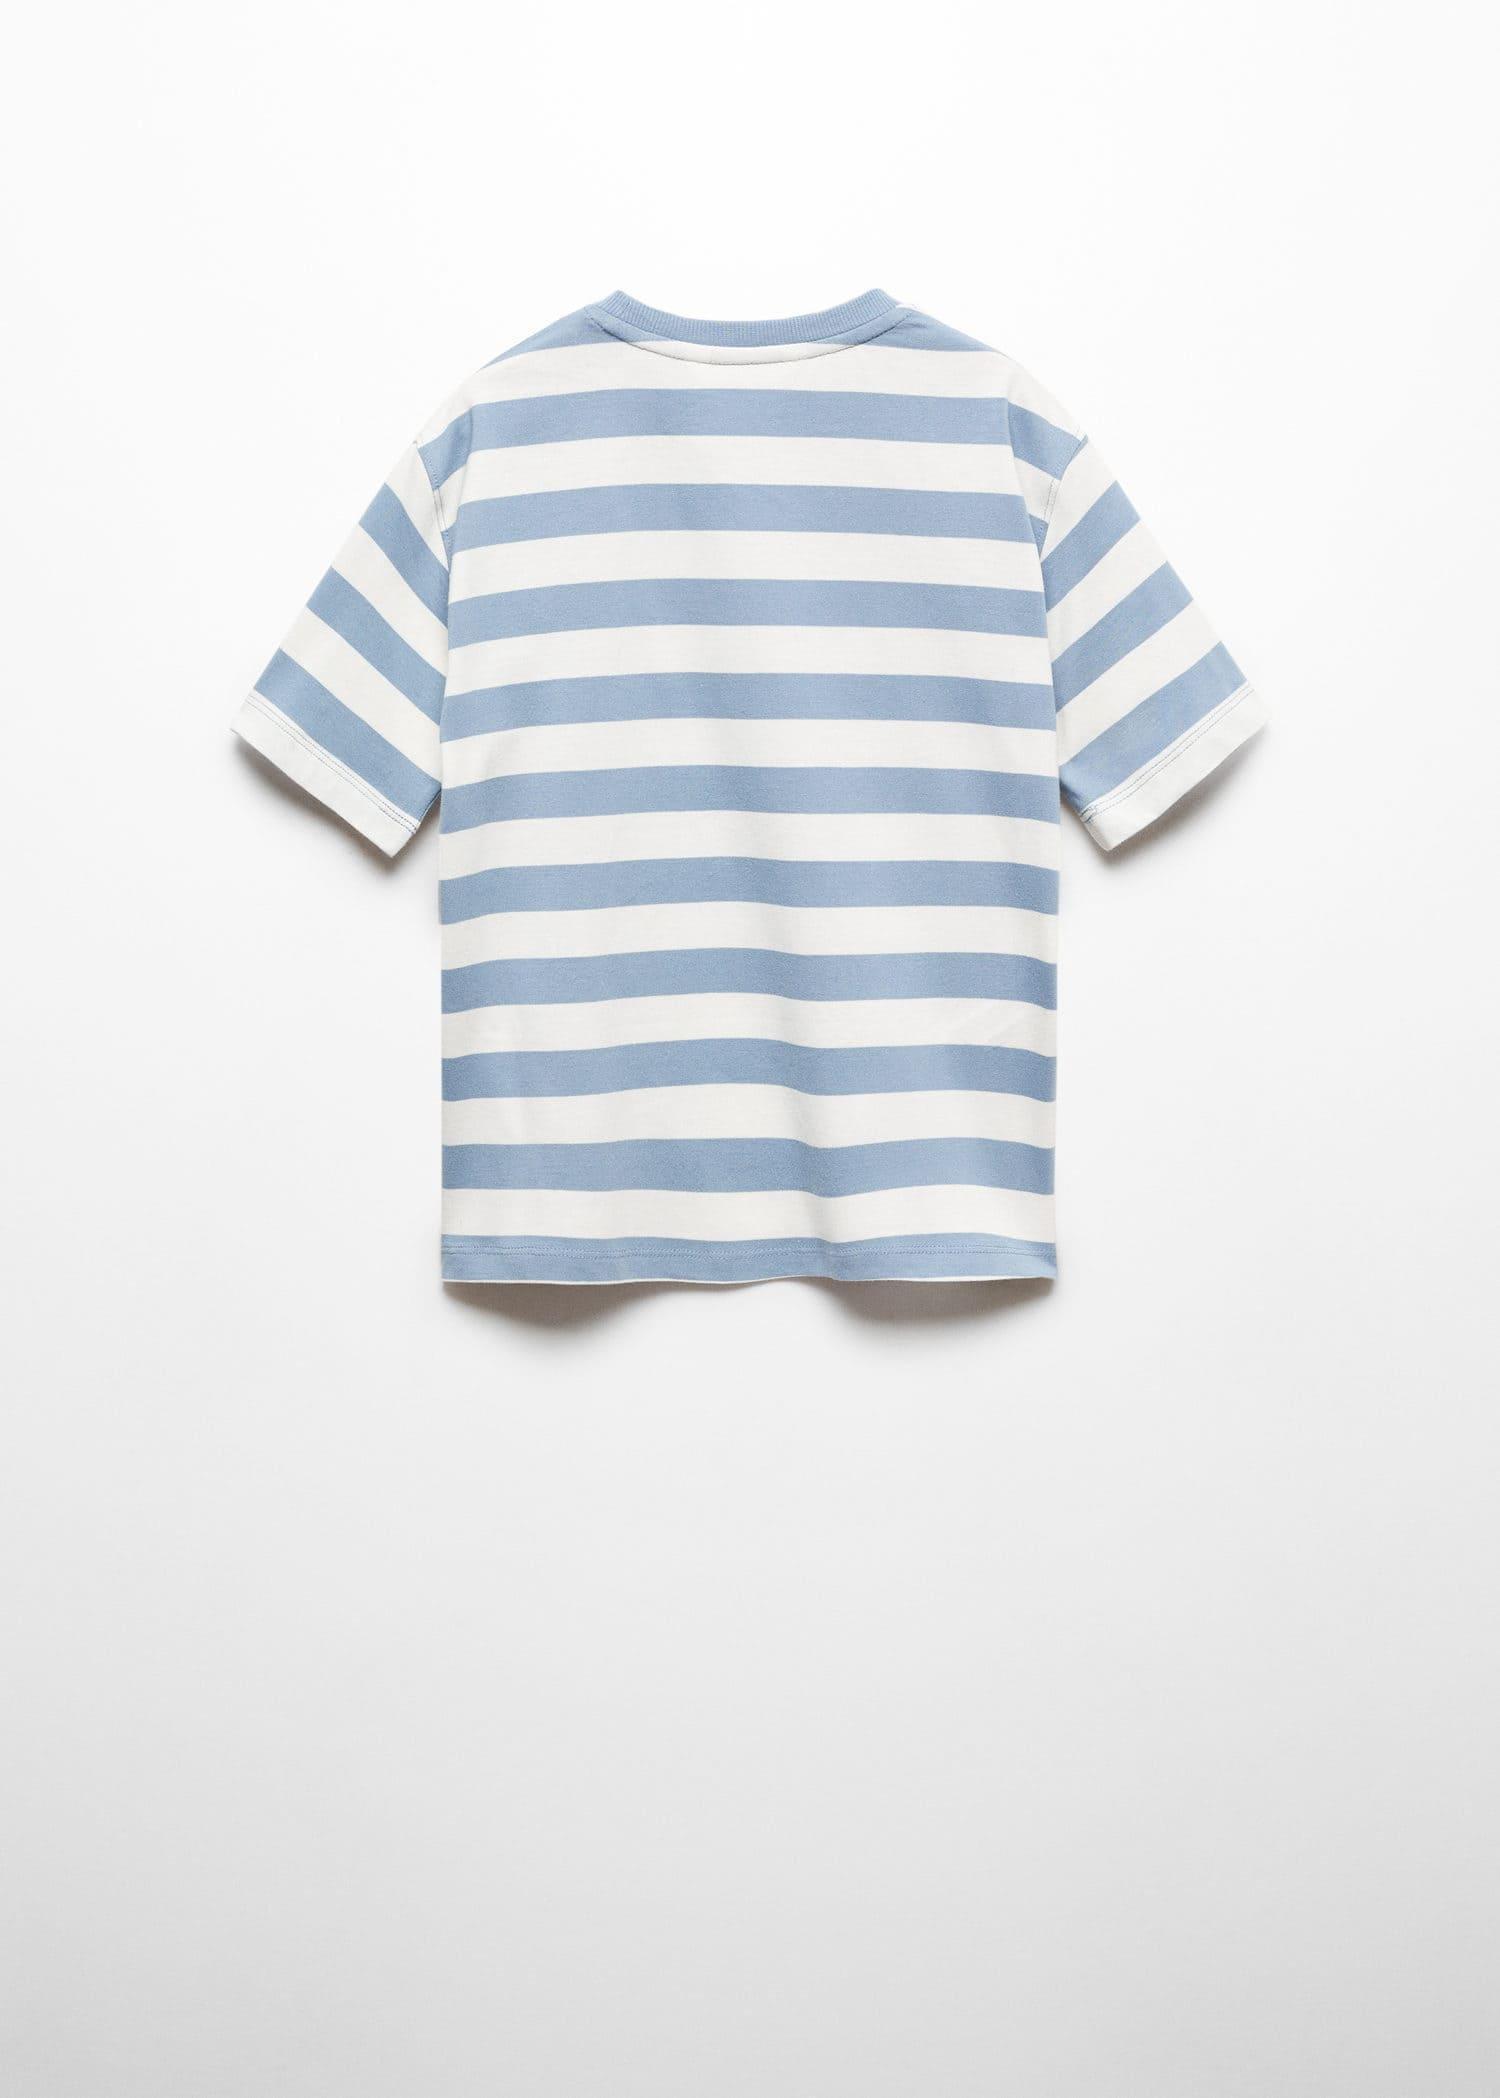 Mango - Blue Lt-Pastel Striped Cotton T-Shirt, Kids Boys